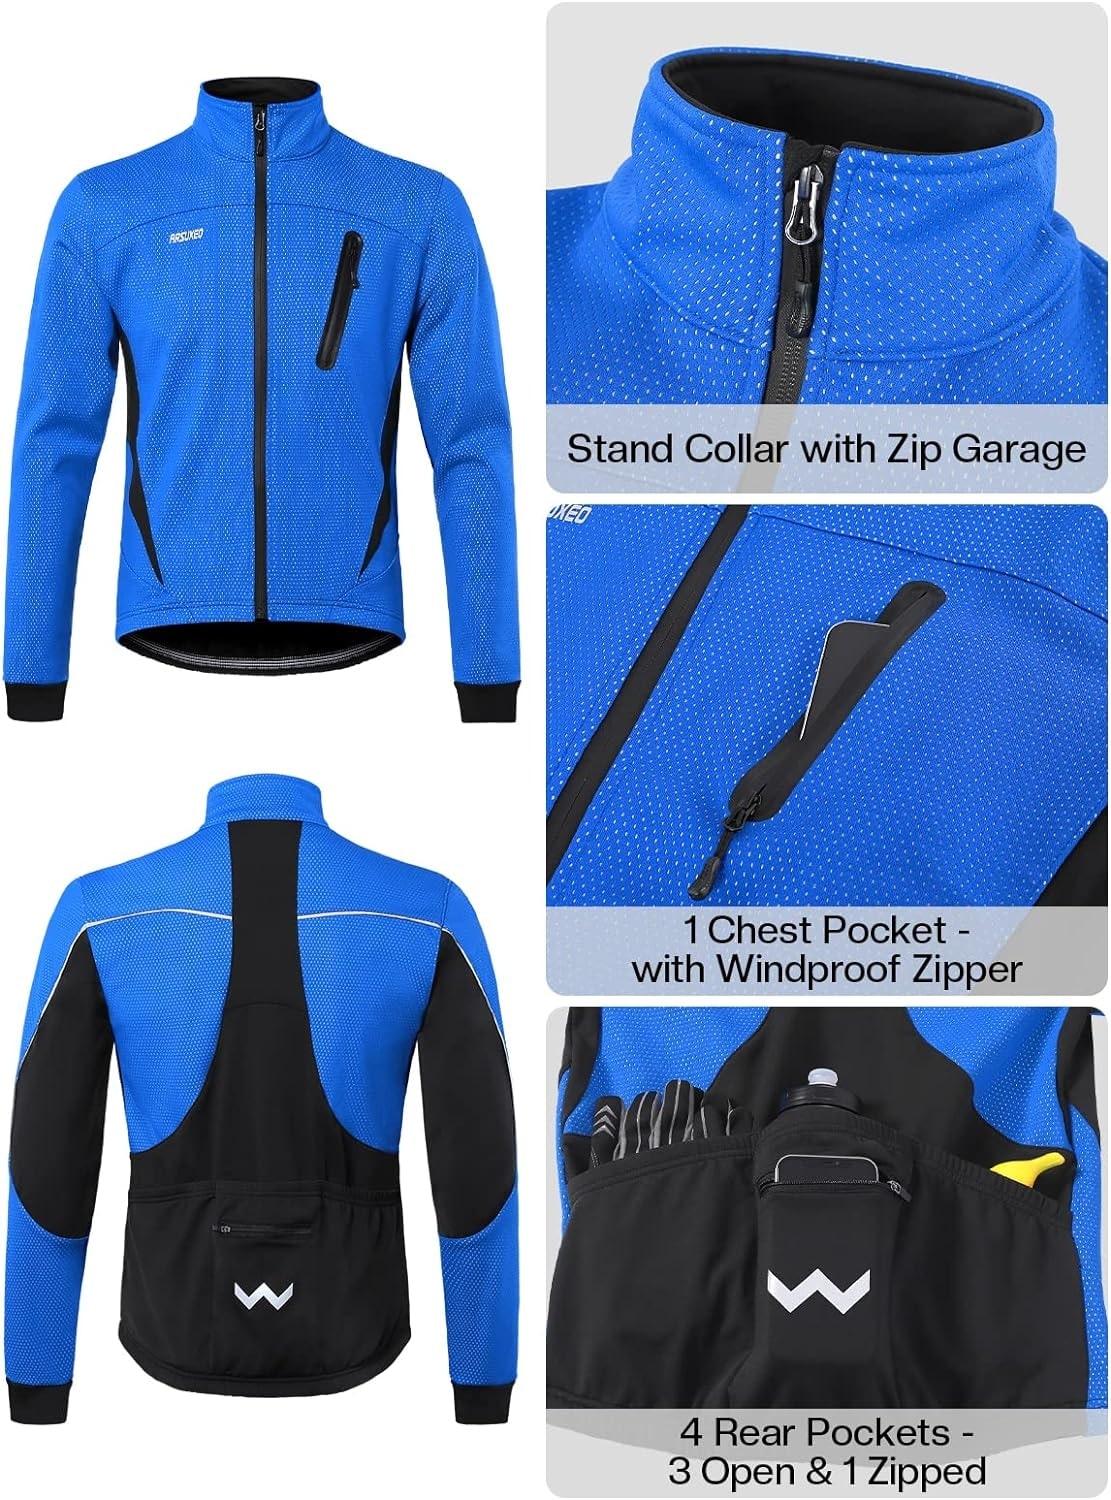 ARSUXEO Men's Winter Cycling Jacket Thermal Fleece Softshell MTB